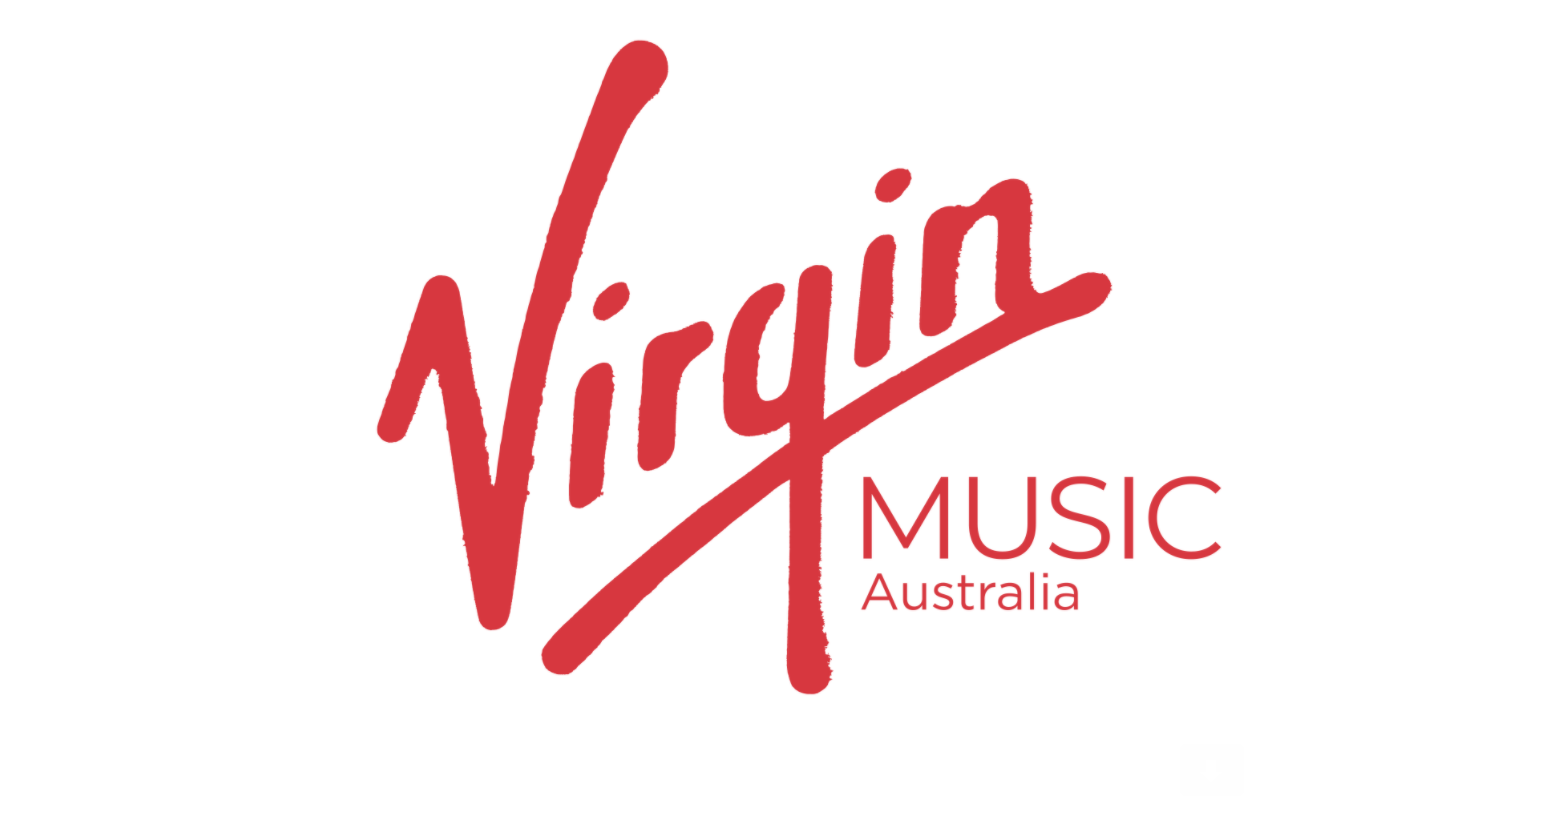 Virgin Music Australia partners with Biordi for global distribution